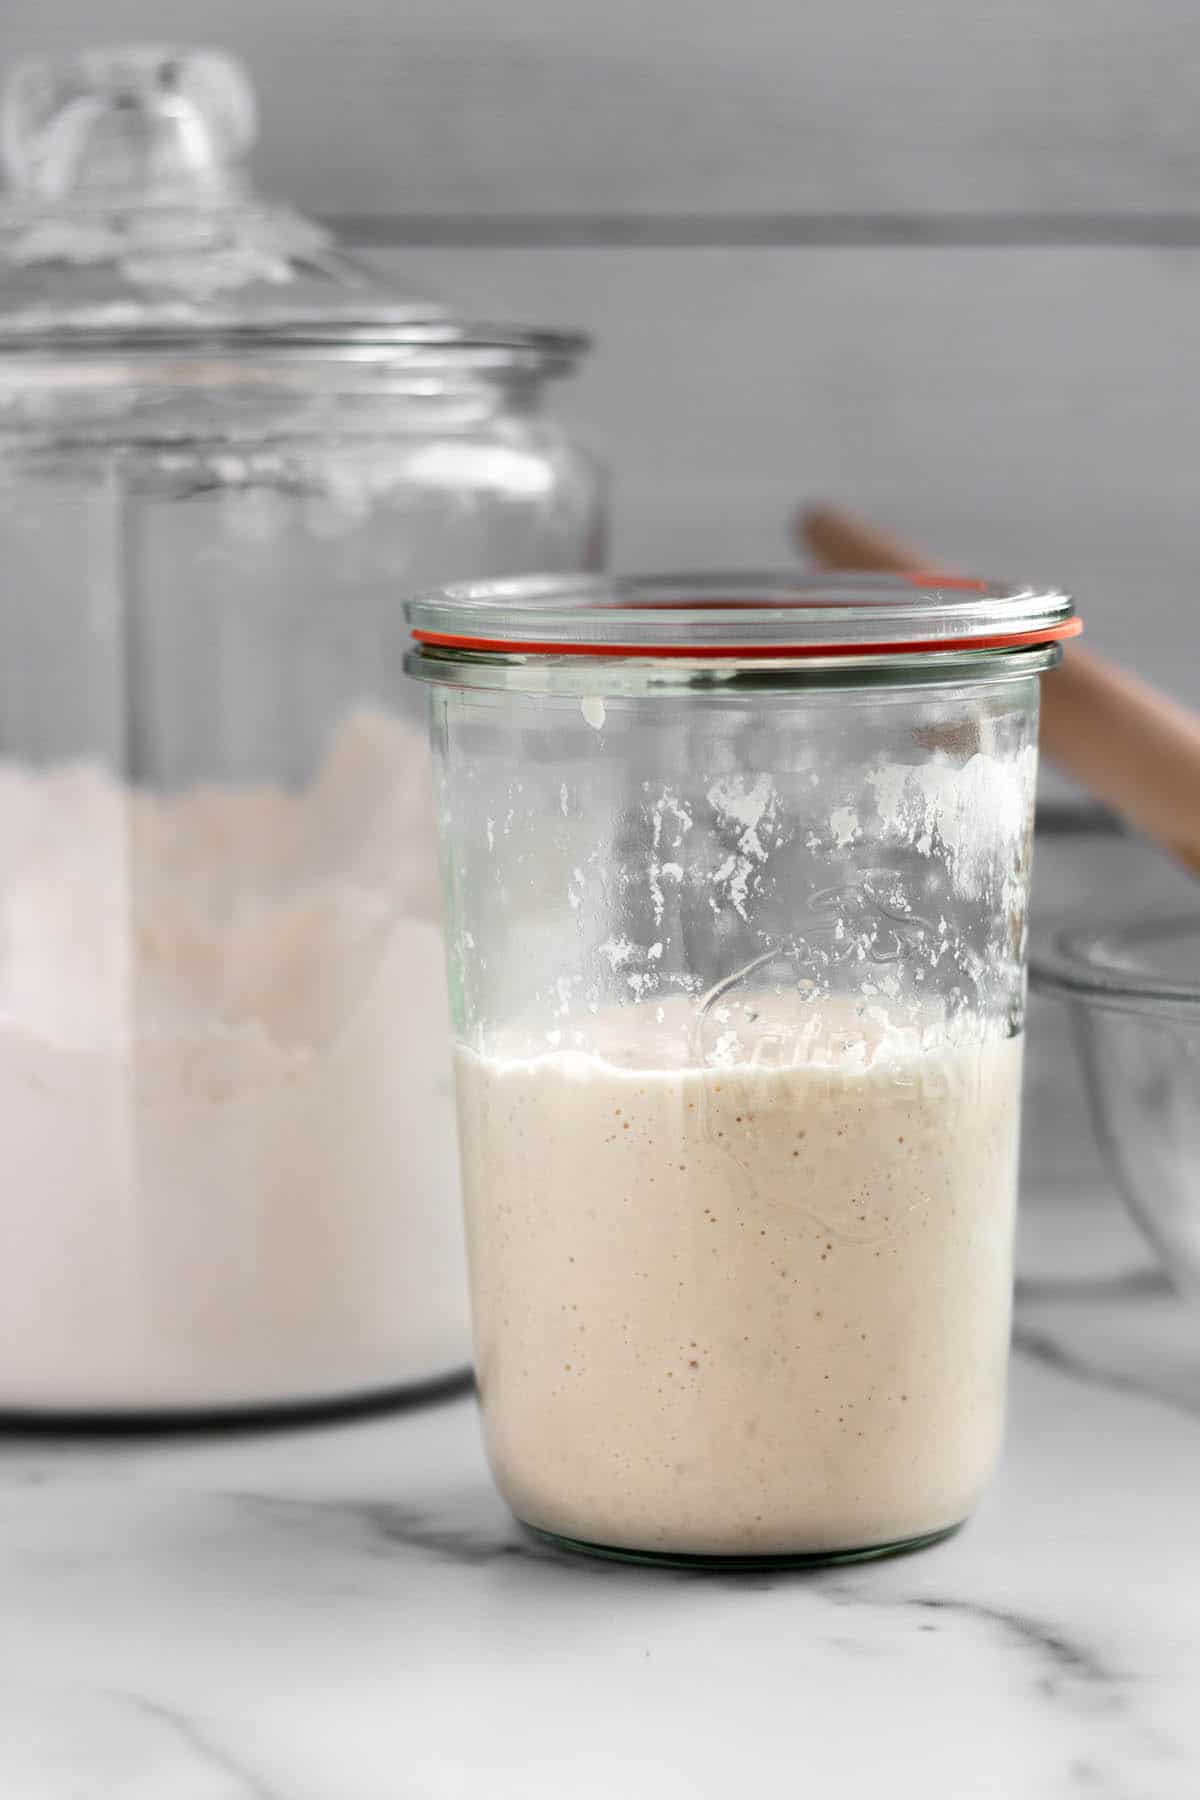 A glass jar with sourdough starter, flour and a dough whisk.